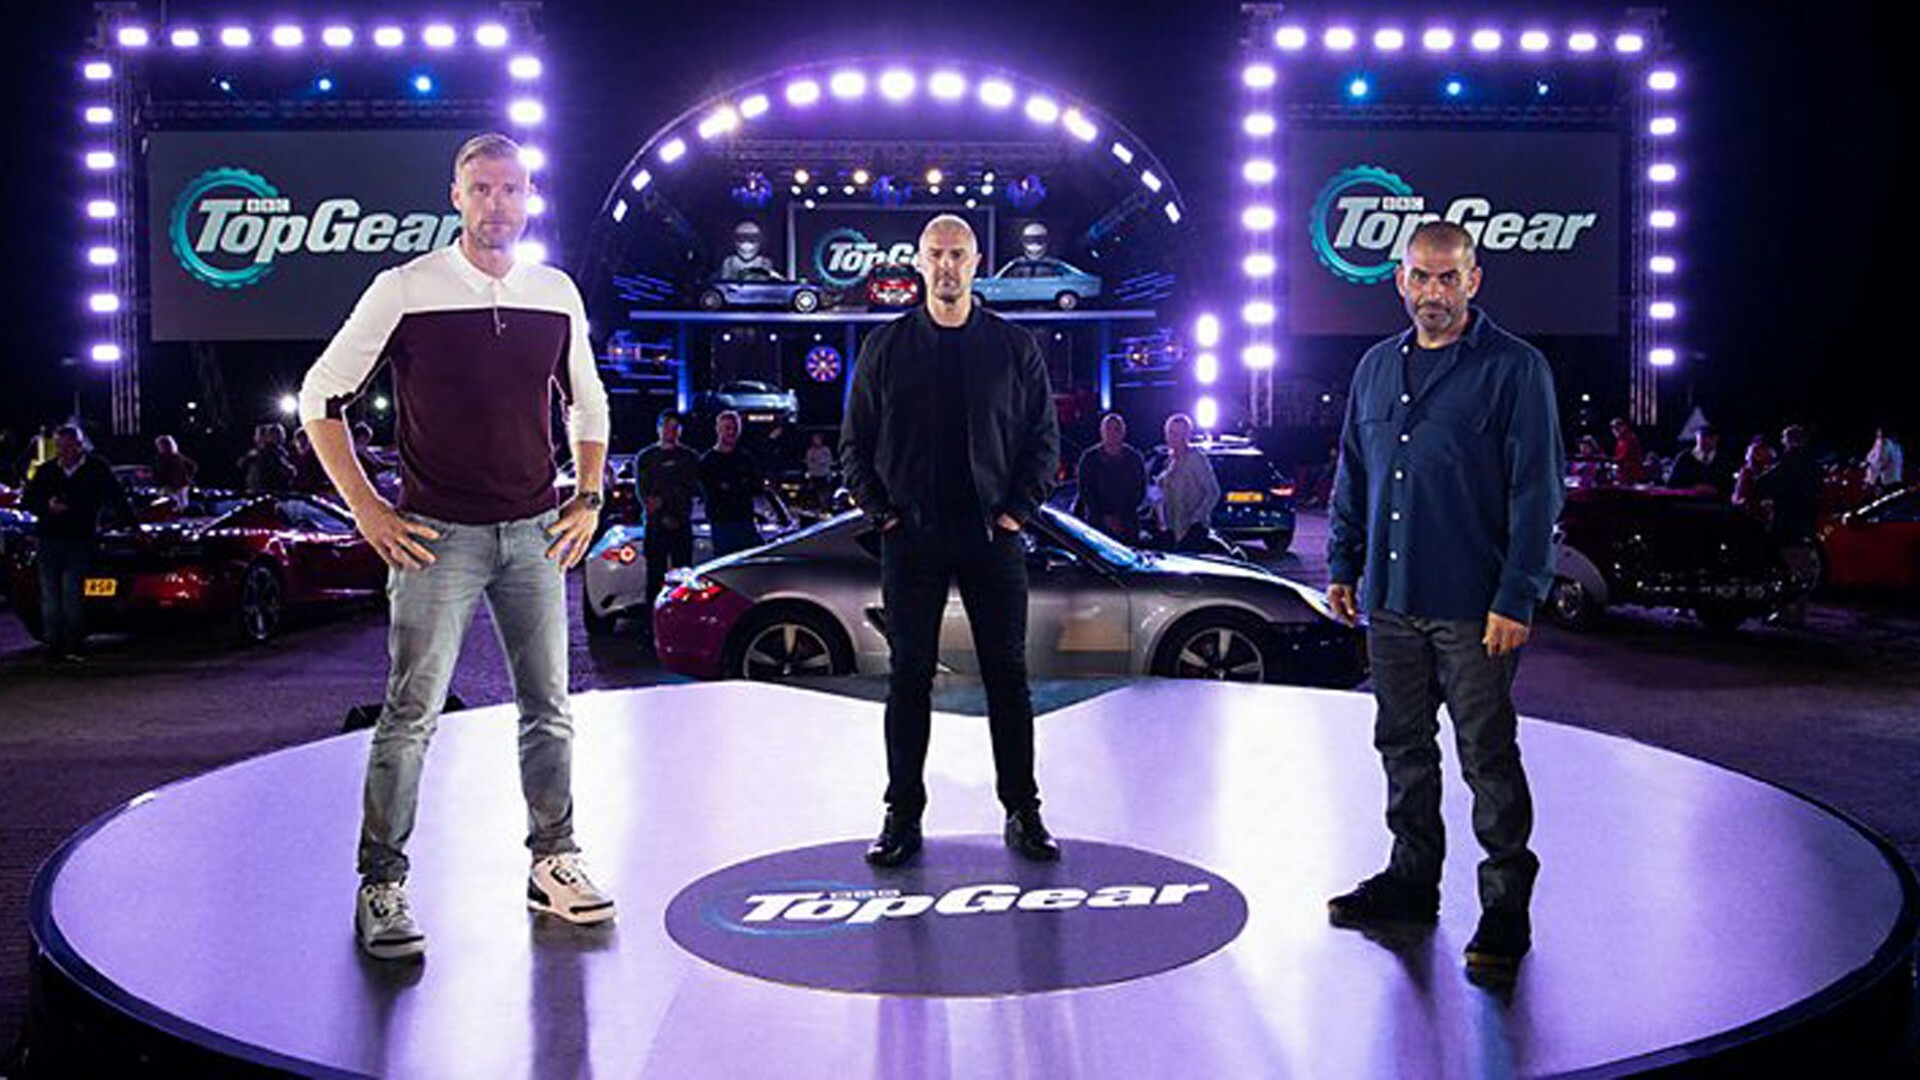 BBC Denies Canceling 'Top Gear' as Rumors Swirl